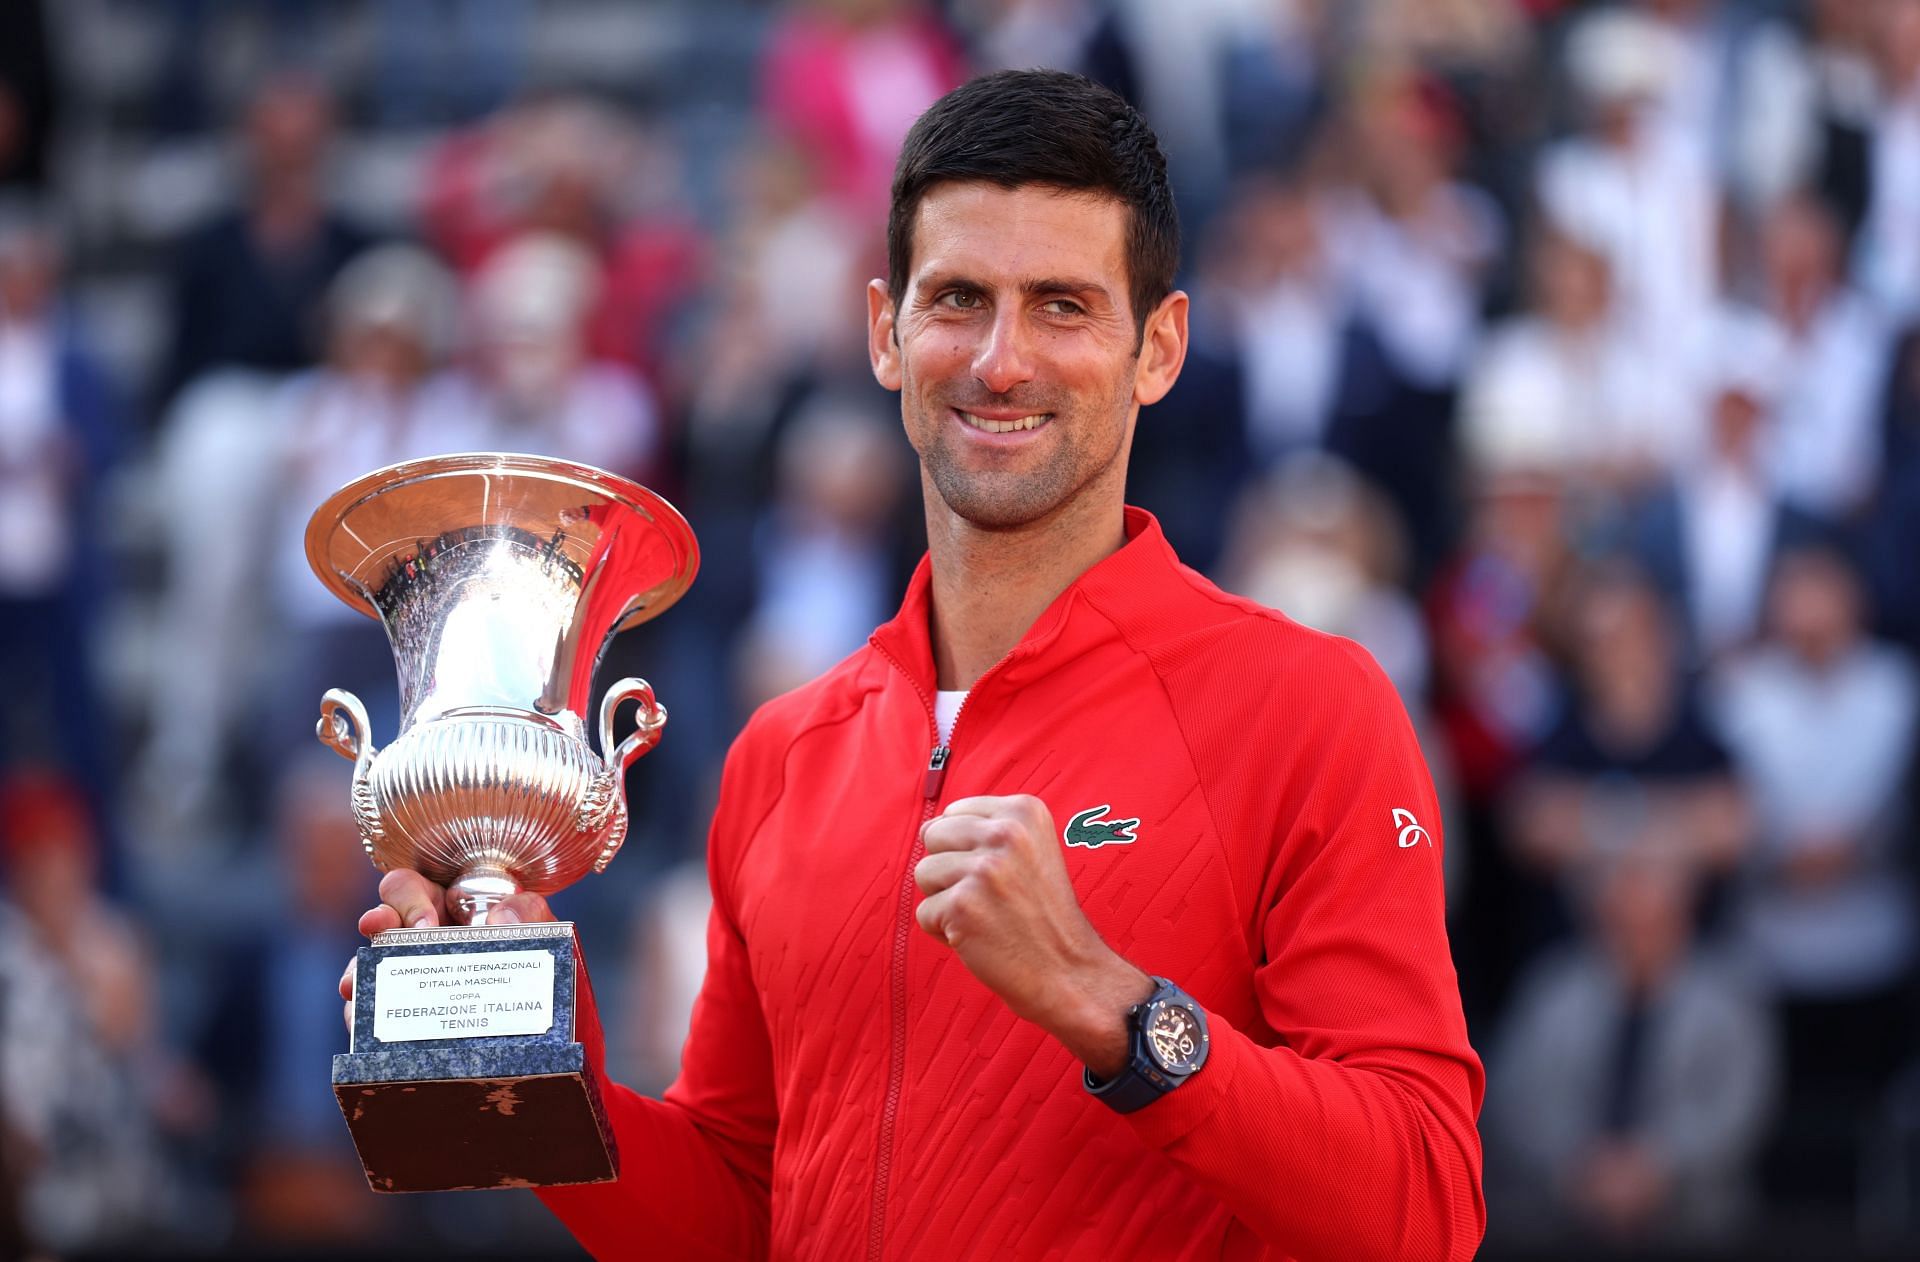 Novak Djokovic won the 2022 Italian Open